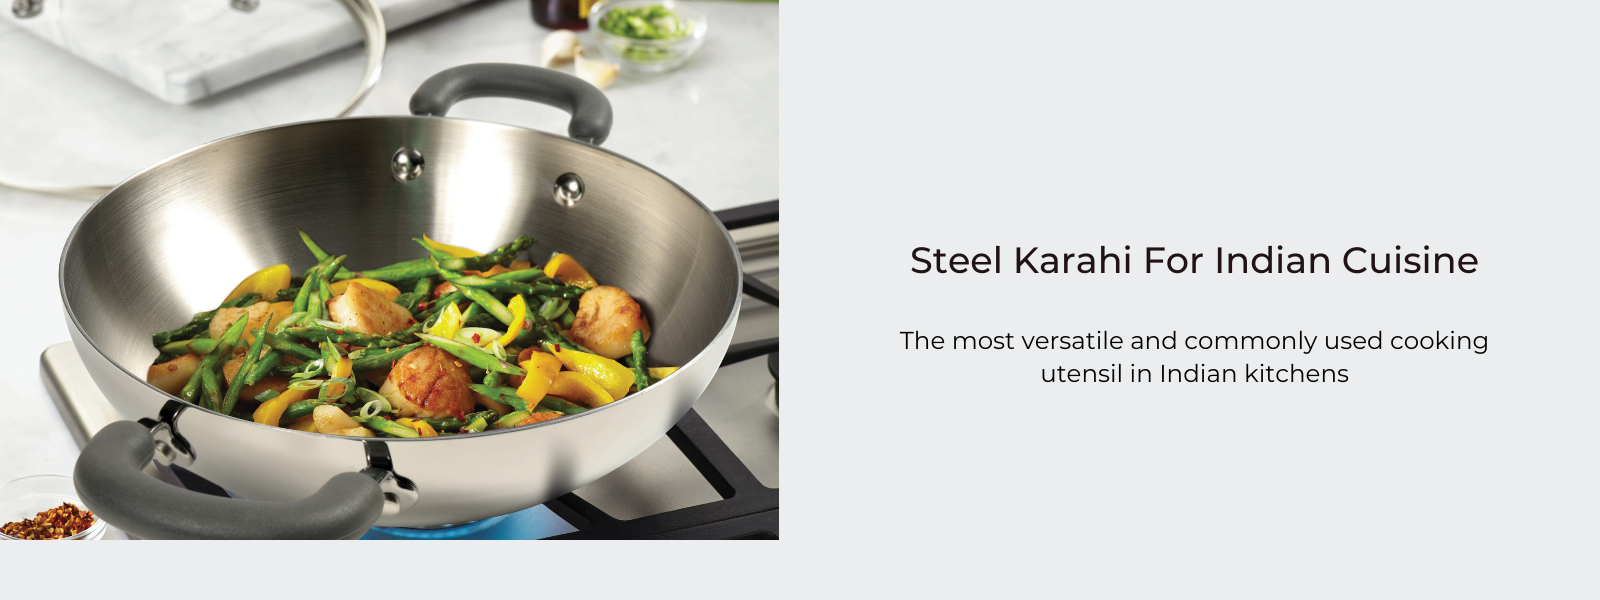 Steel Karahi: Versatile Cookware For Indian Meals - PotsandPans India